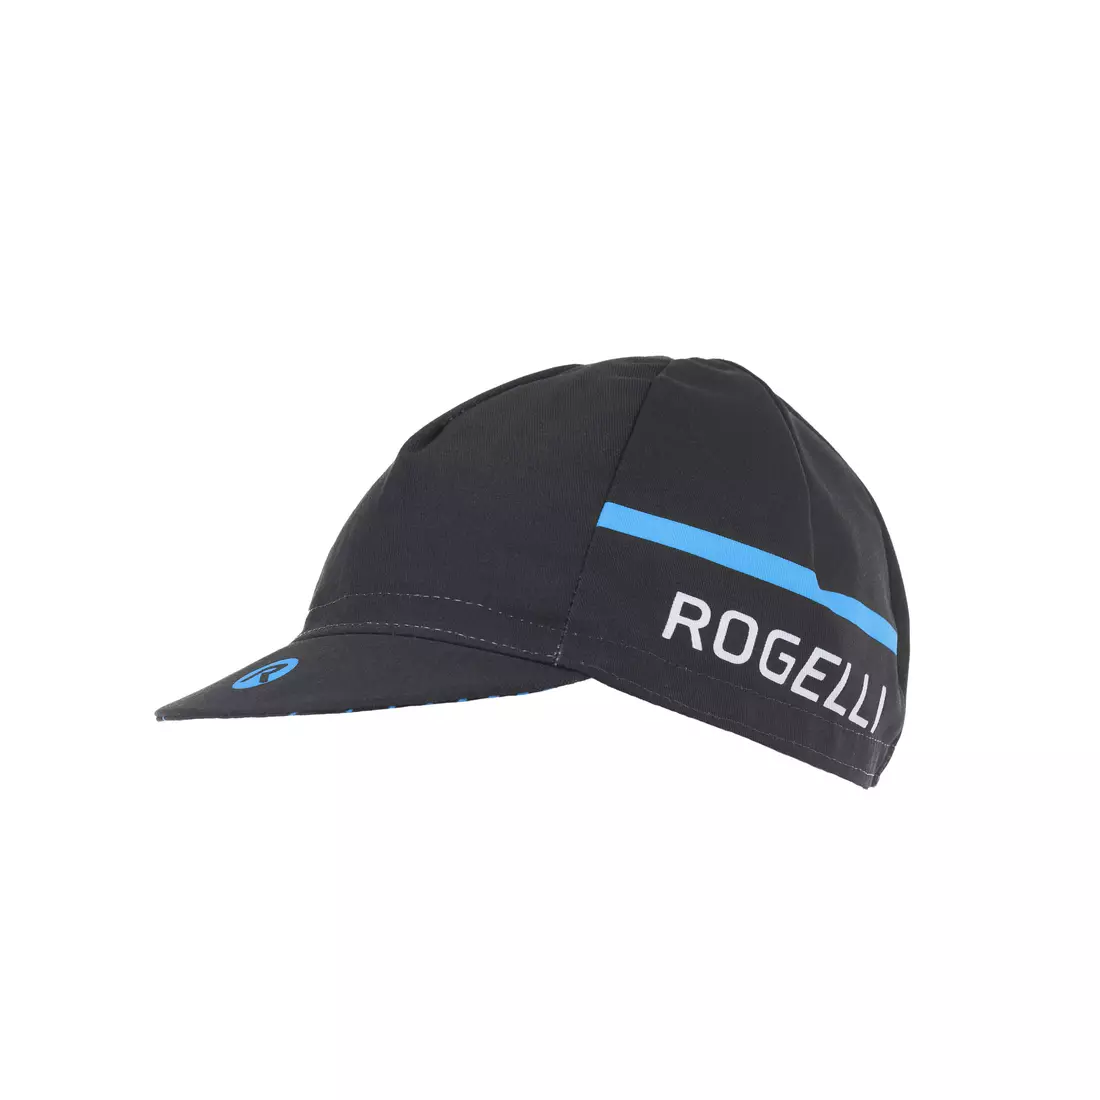 ROGELLI Hero cycling cap 009.972